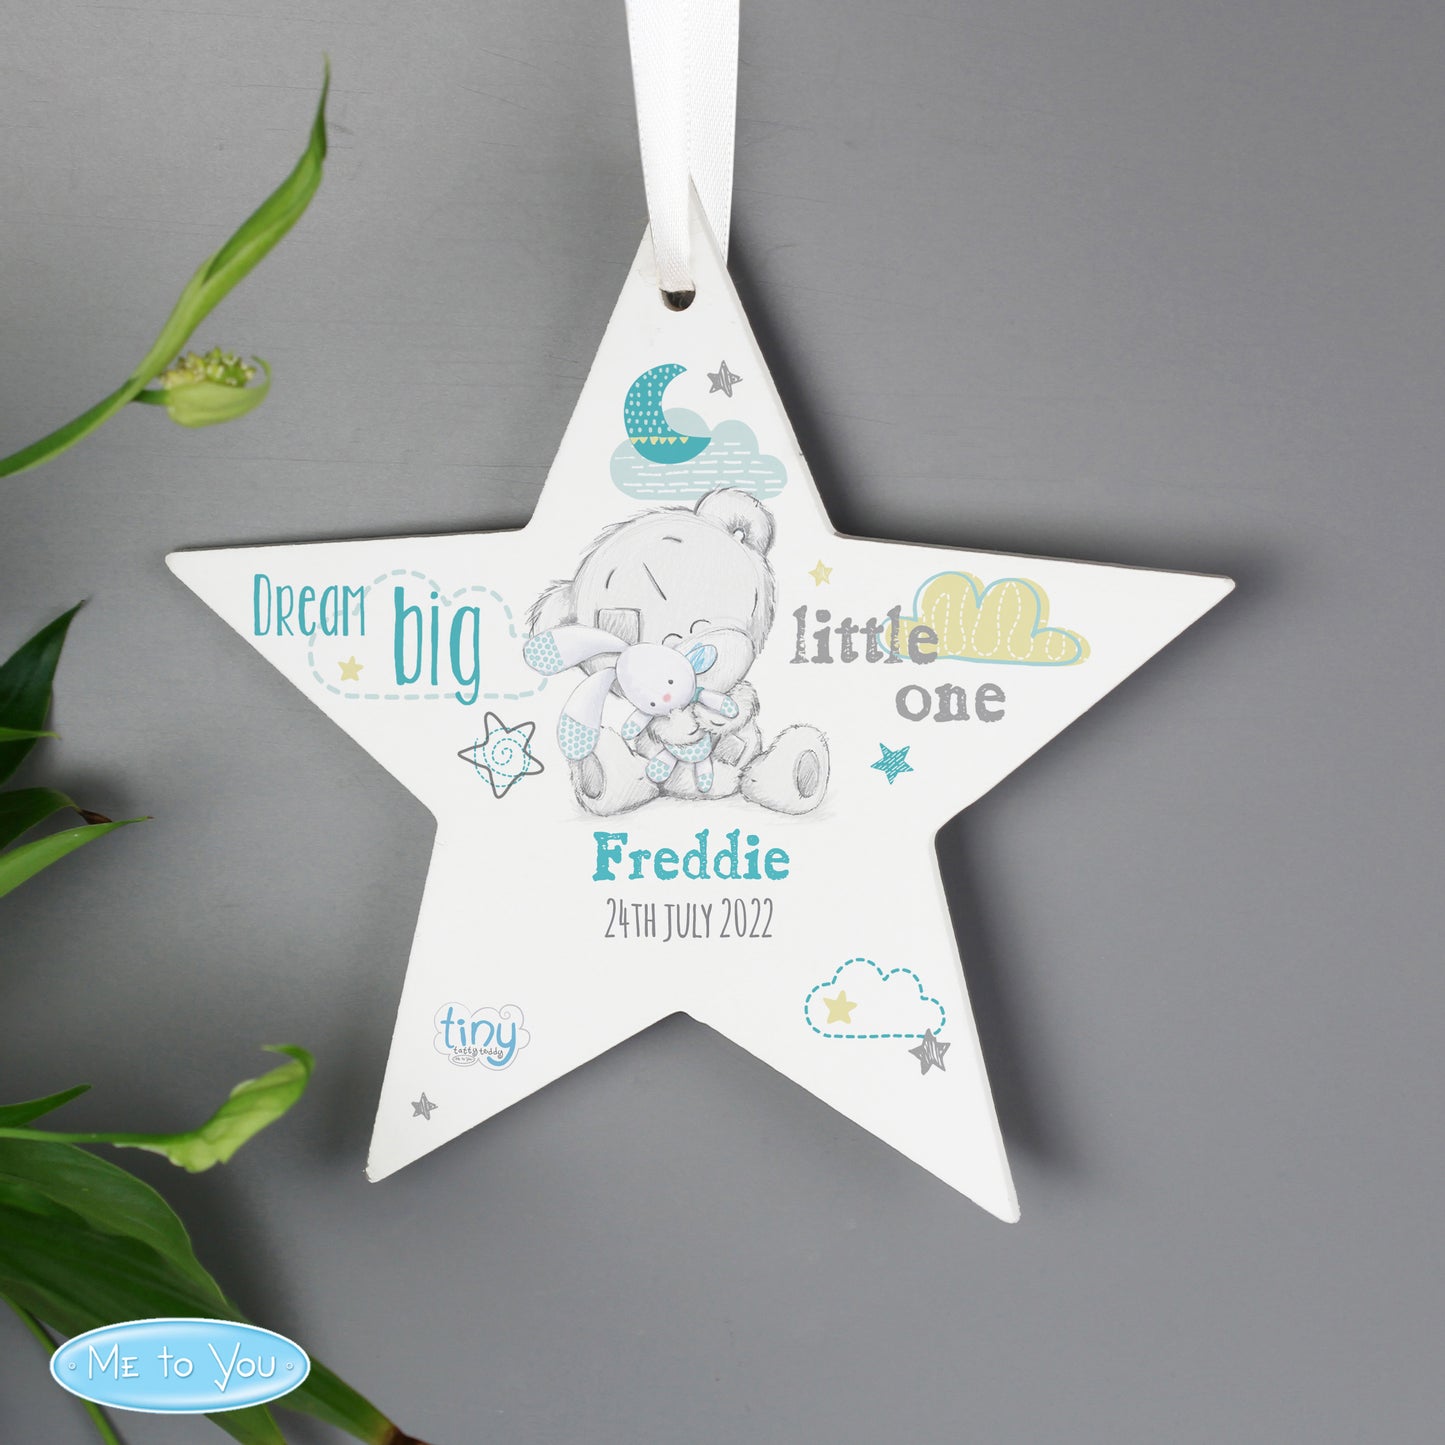 Personalised Star Hanger - Tatty Teddy - Violet Belle Gifts - Personalised Star Hanger - Tatty Teddy